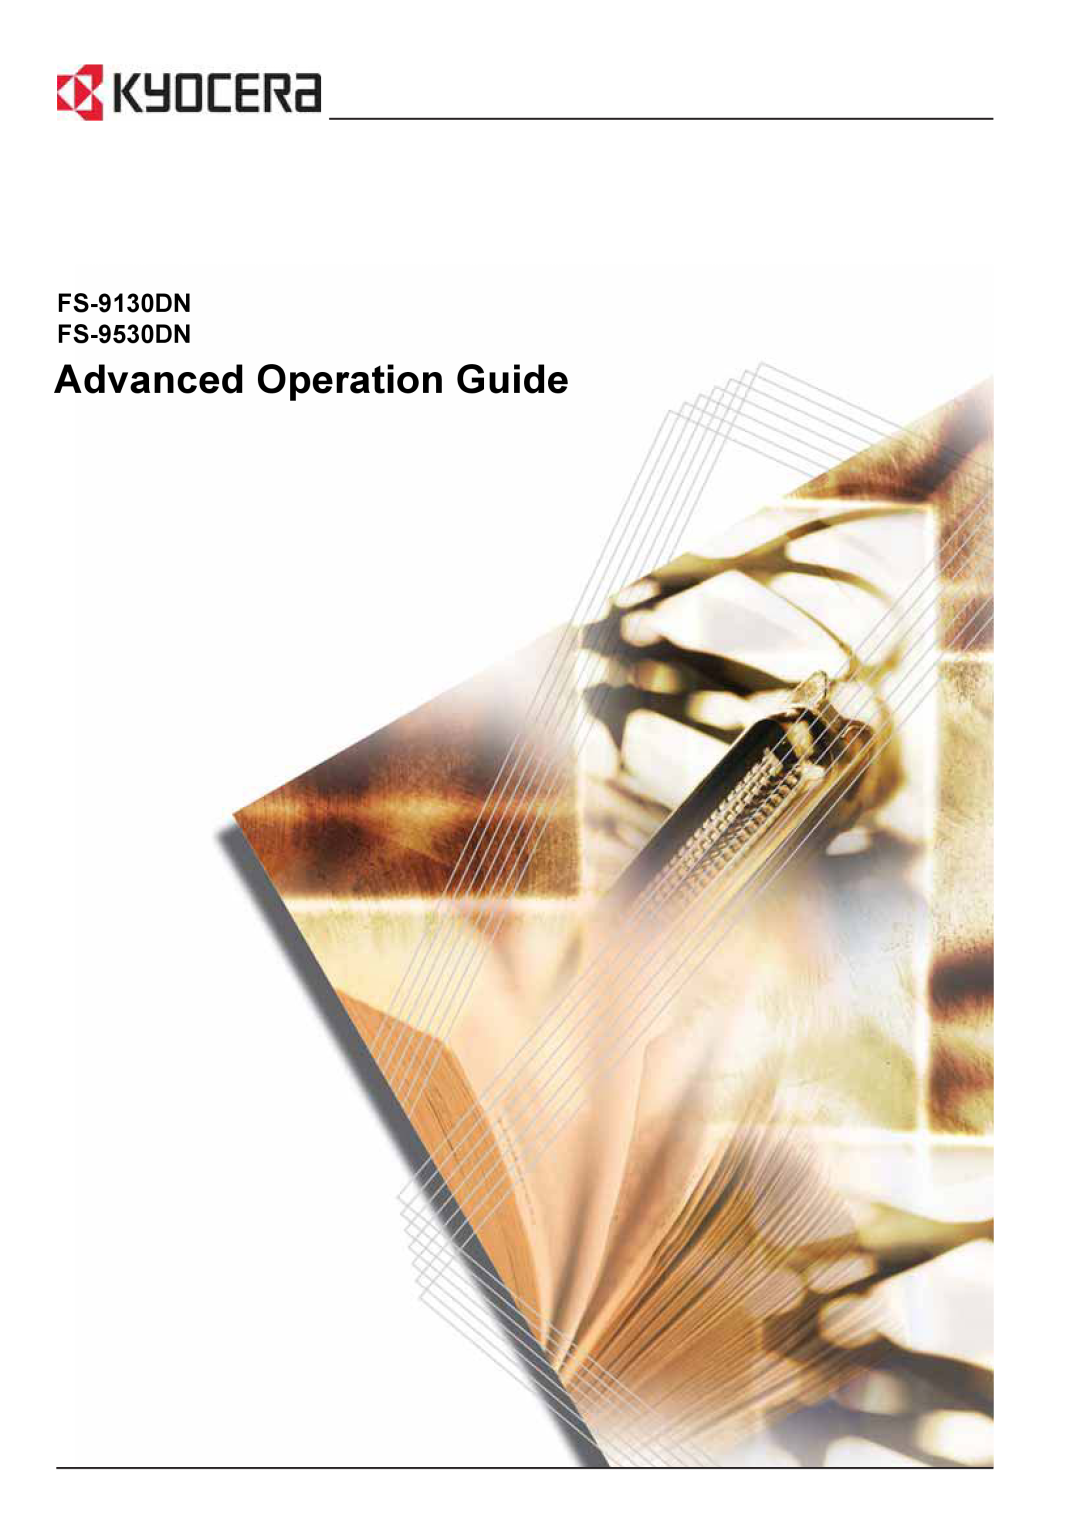 Kyocera manual Advanced Operation Guide, FS-9130DN FS-9530DN 